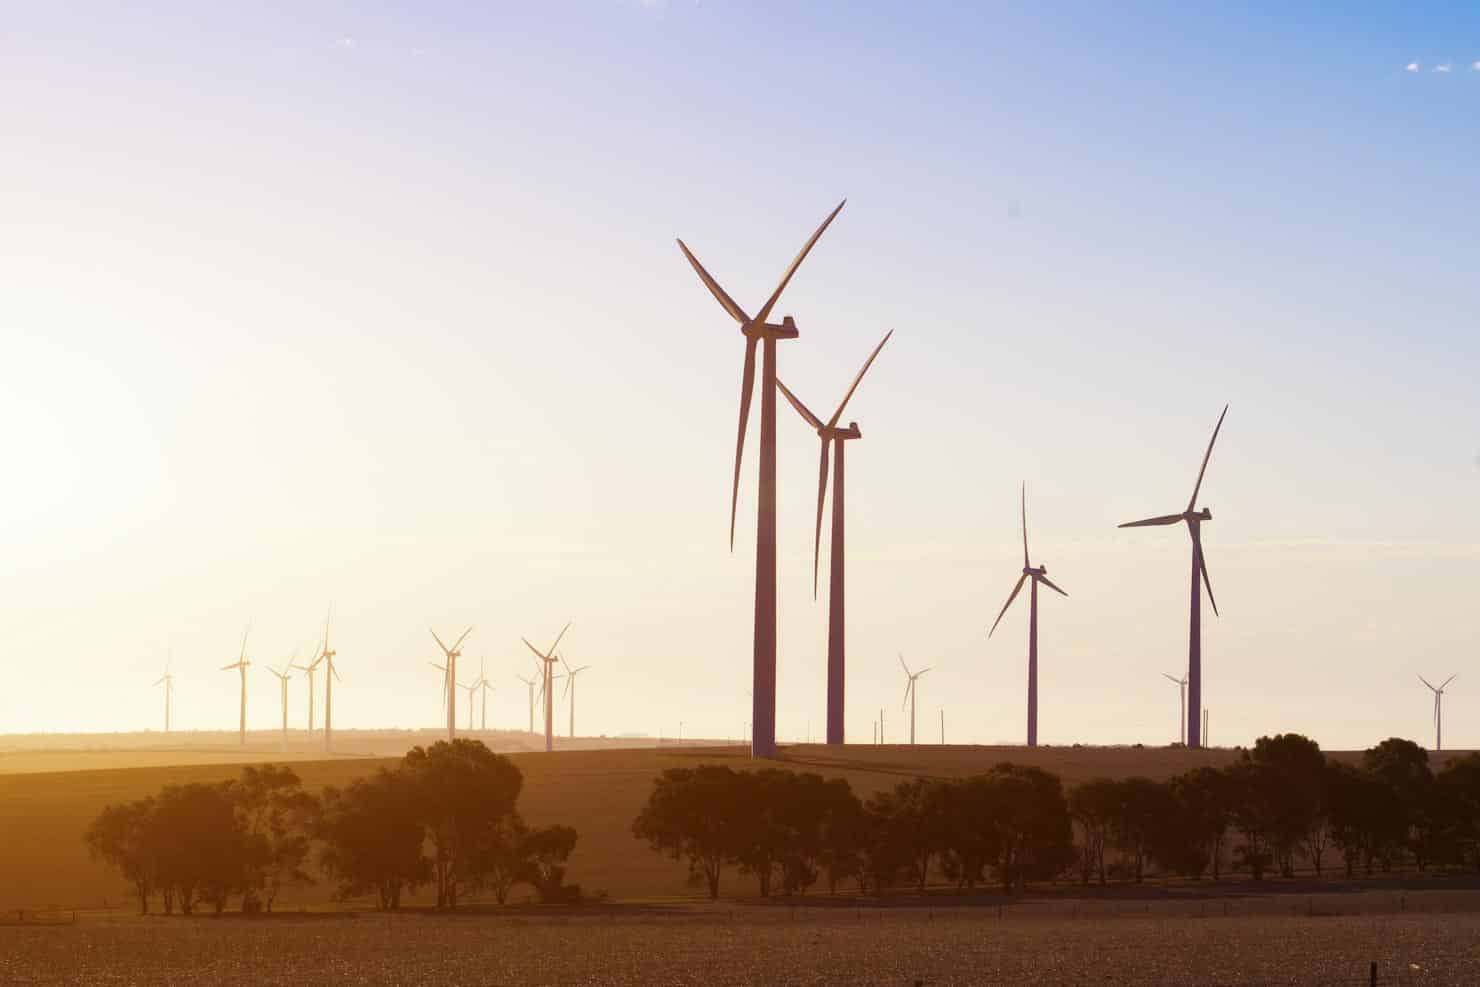 Walkaway Wind Farm near Geraldton WA